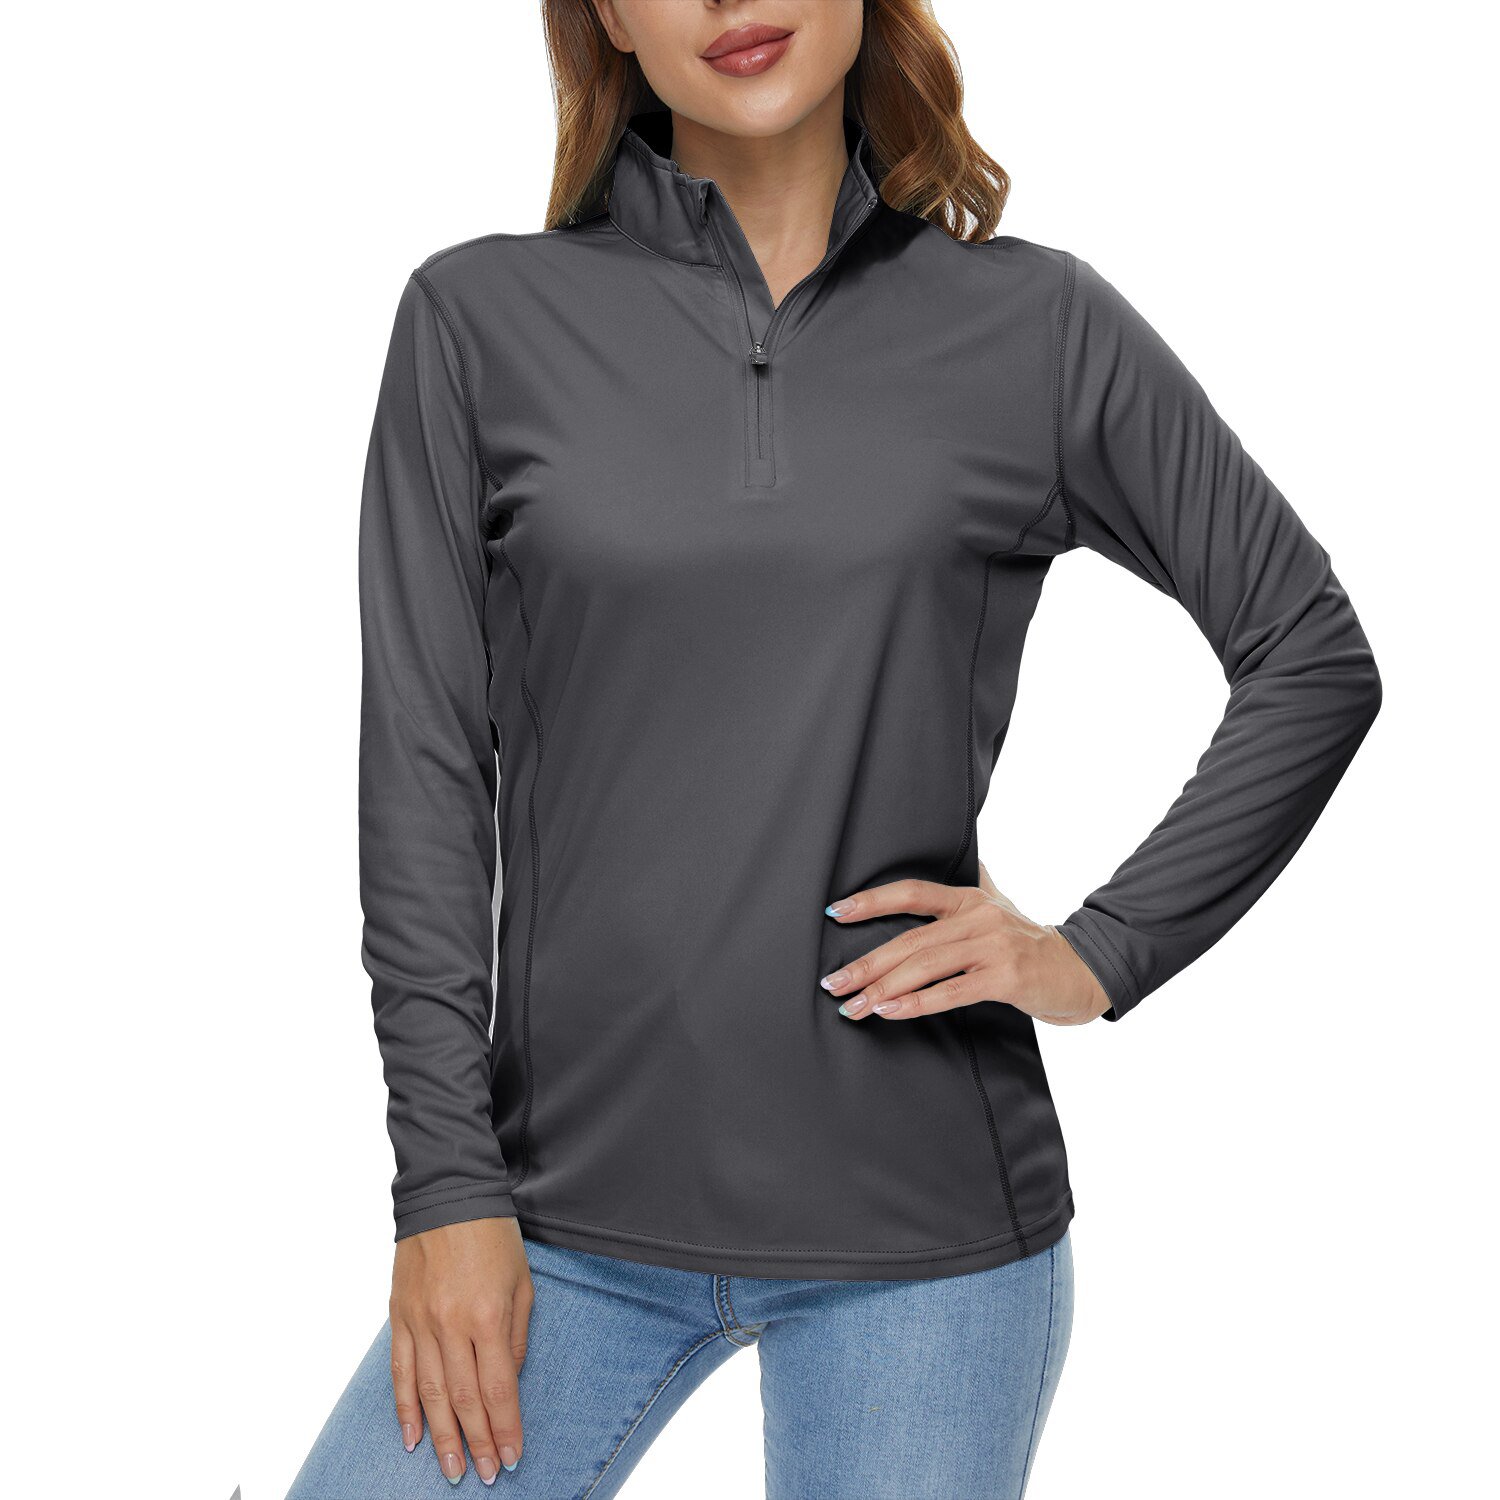 Women Anti UVSun Protection Shirts Outdoor Running T-Shirts Dark Gray